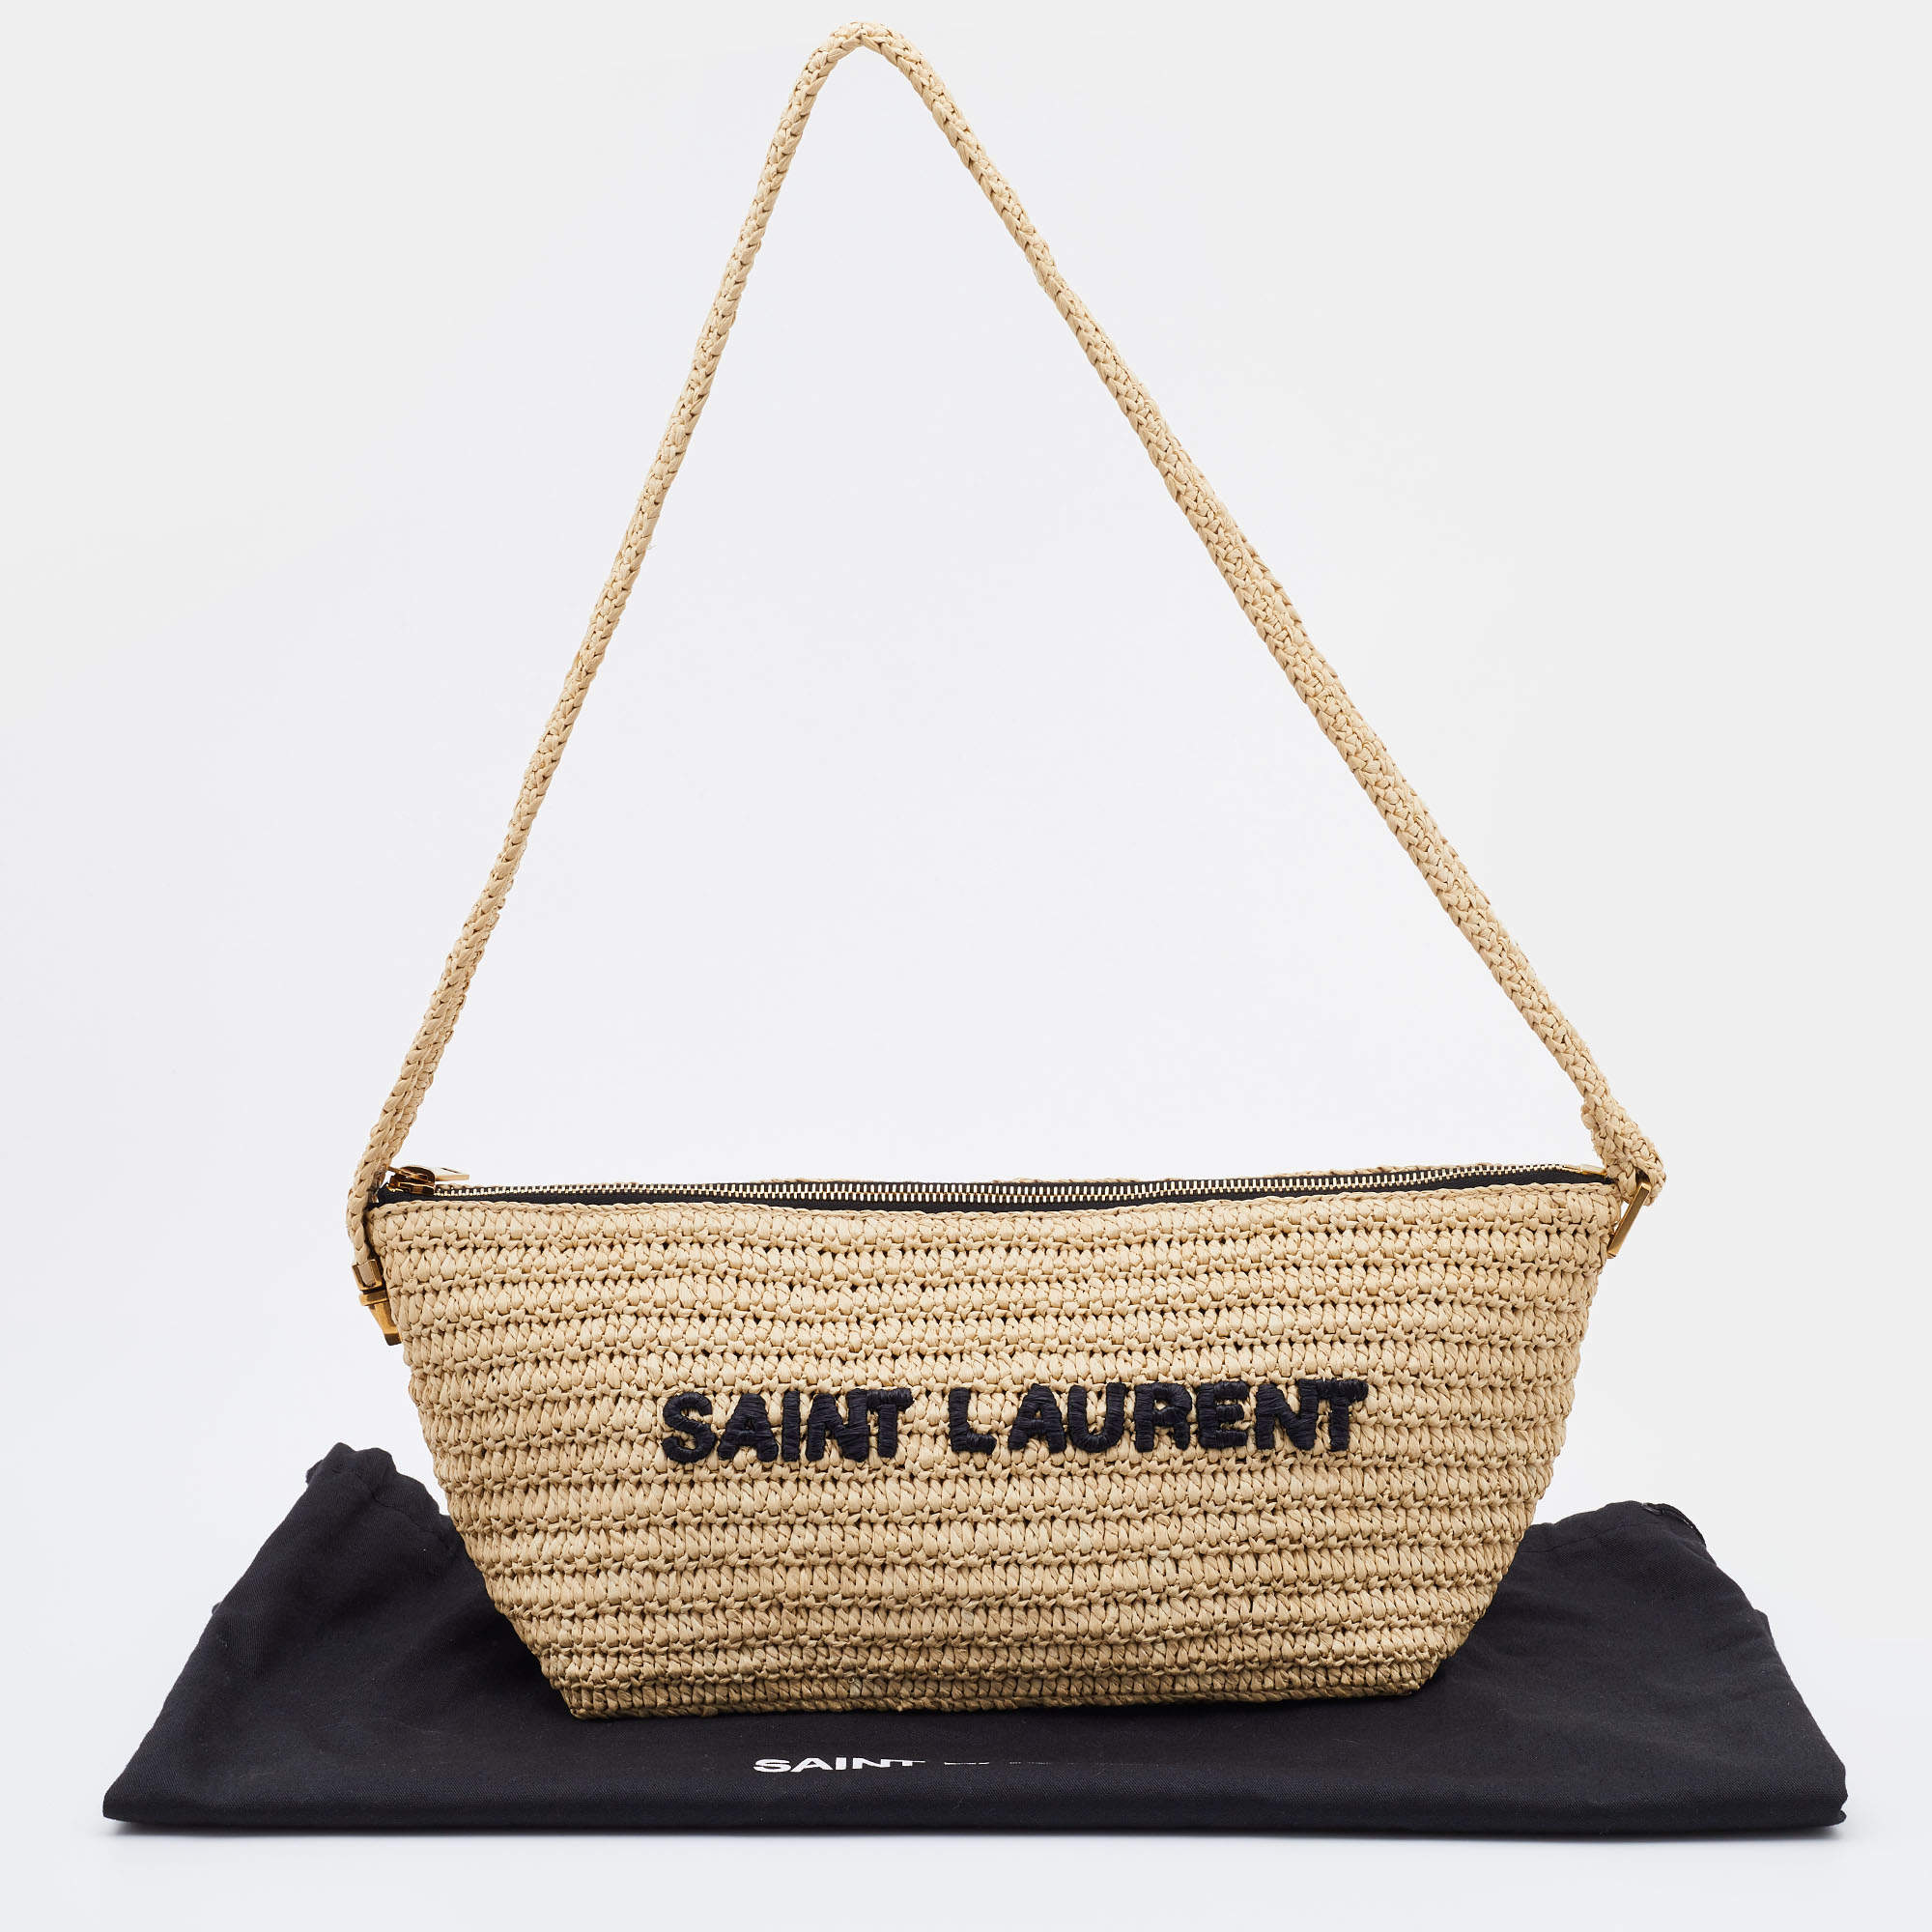 Yves Saint Laurent Wicker Clutch Black - Vintage Lux